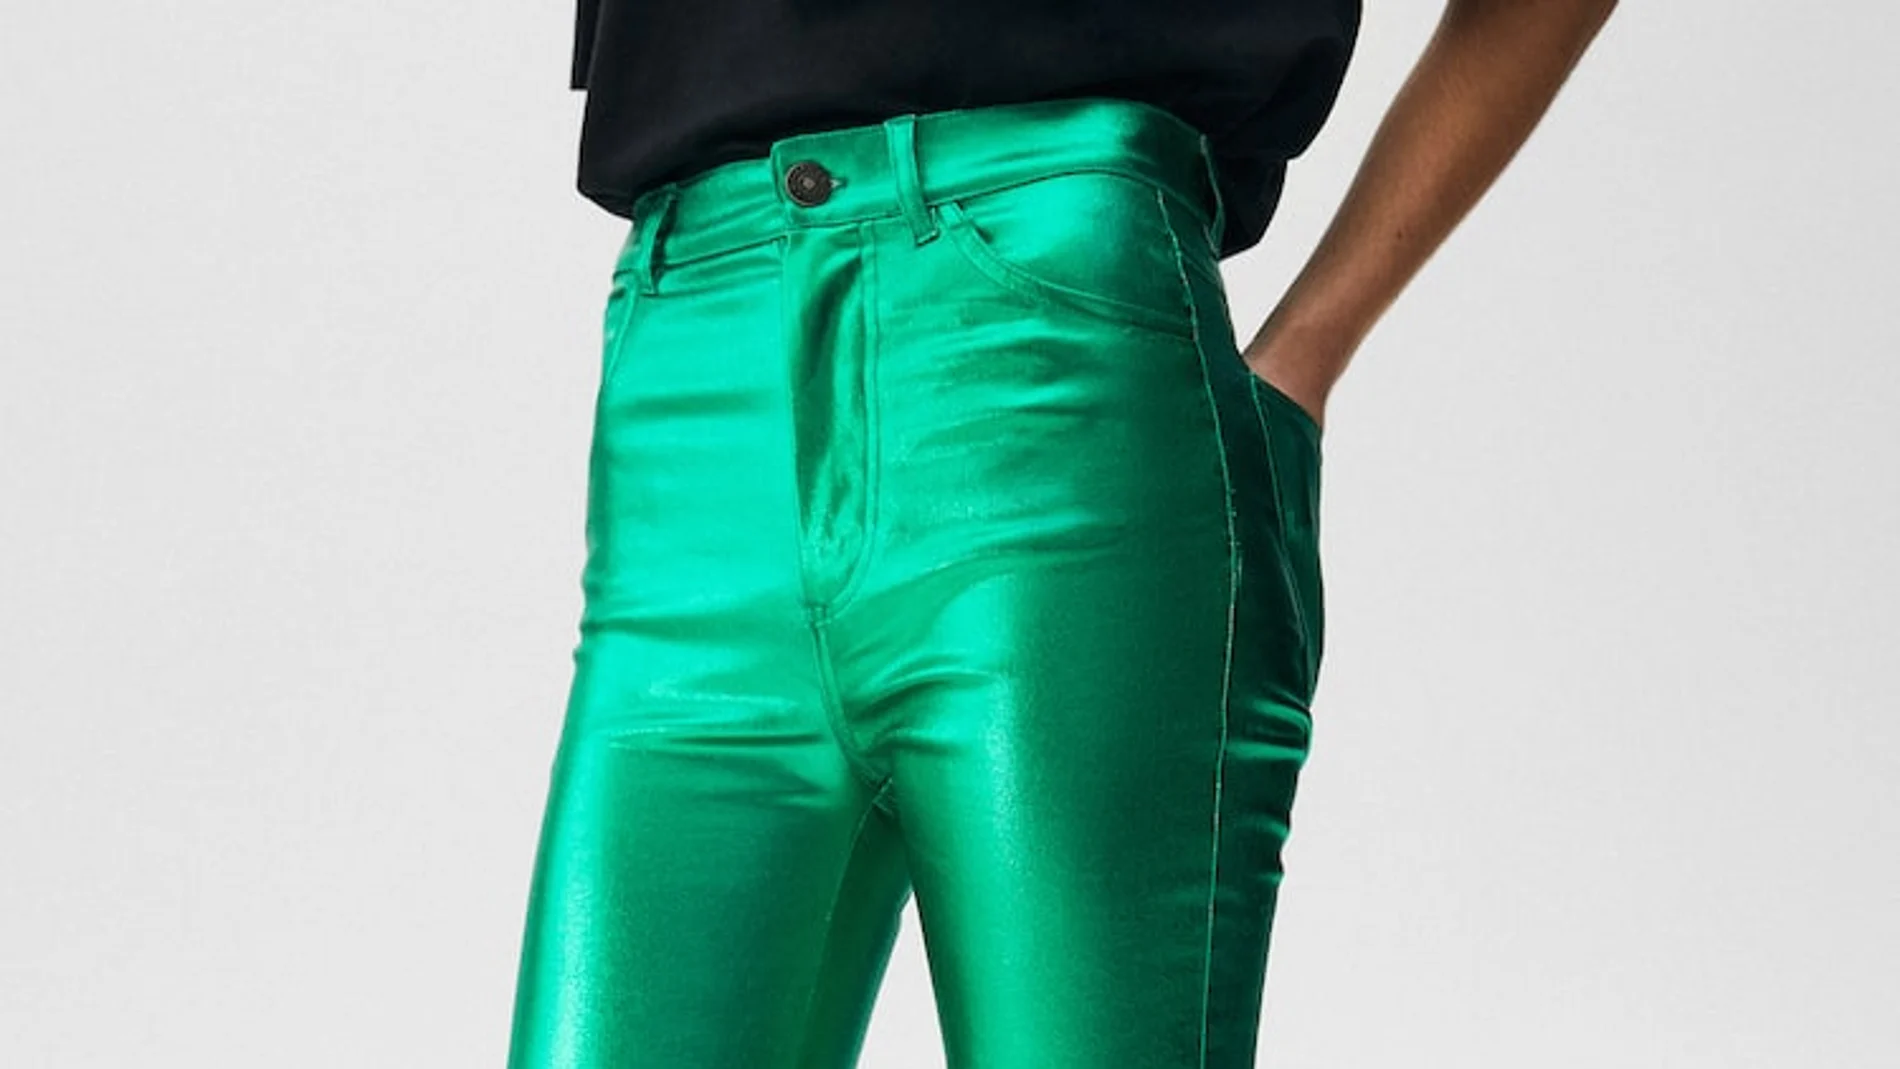 Pantalones verdes metalizados.